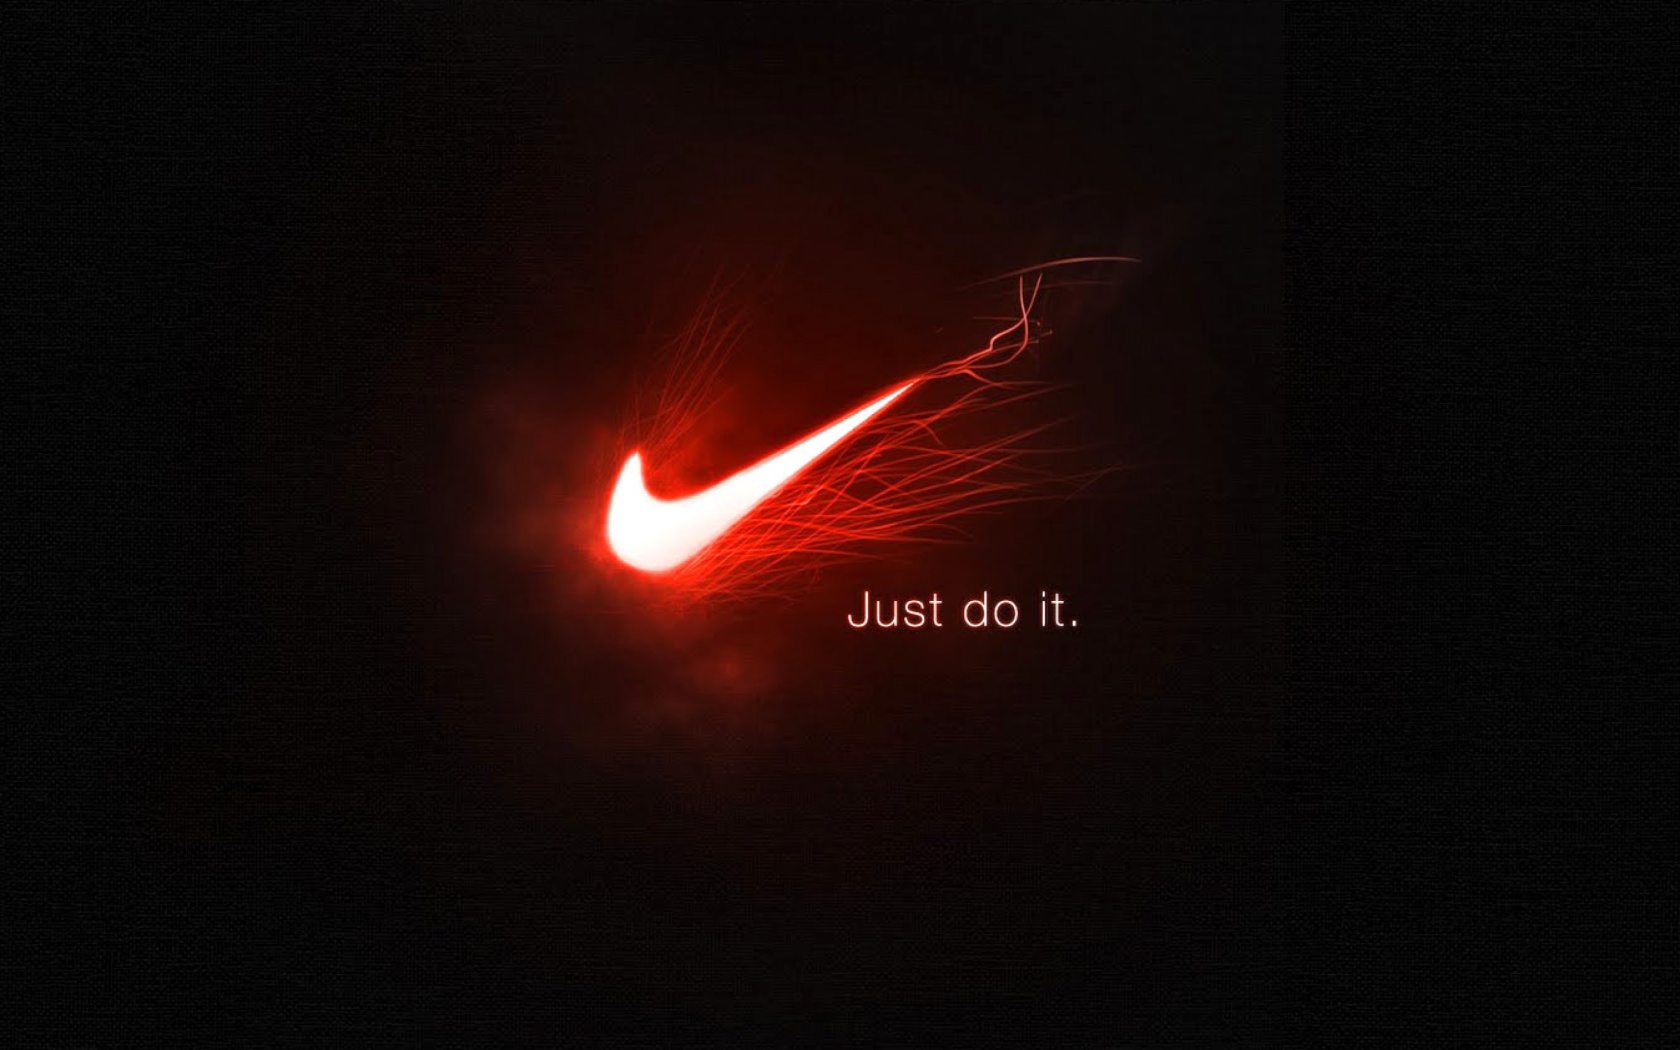 Nike Advertising Slogan Just Do It wallpaper 1680x1050